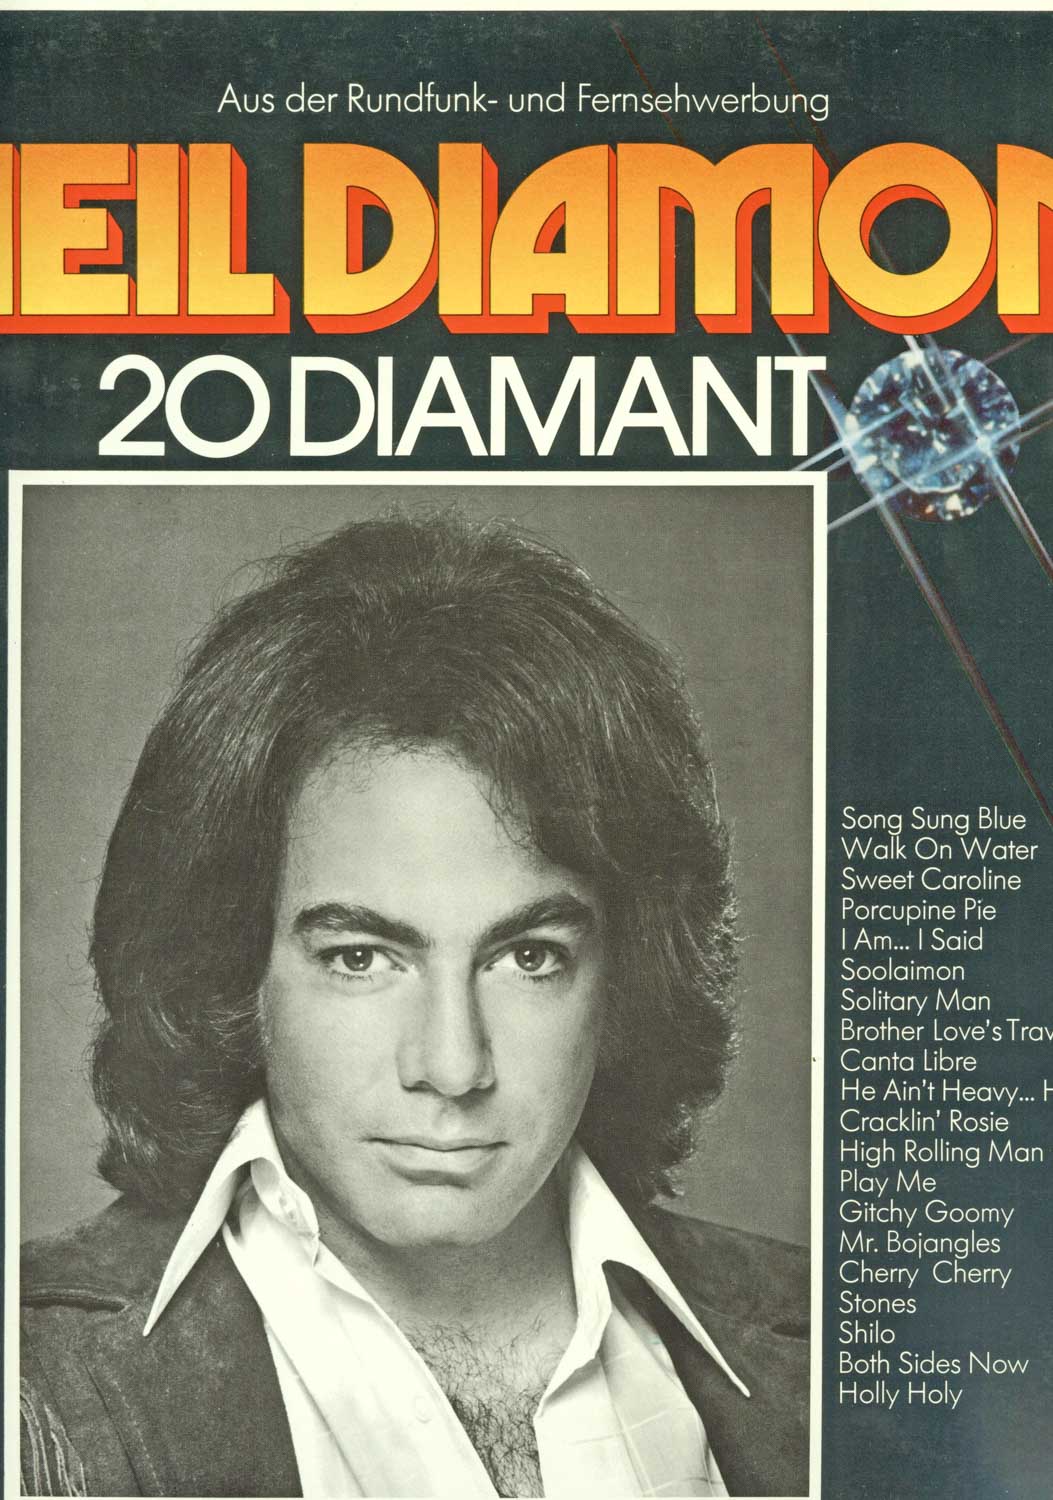 Neil Diamond  20 Diamant Hits (9199 816)  *LP 12'' (Vinyl)*. 